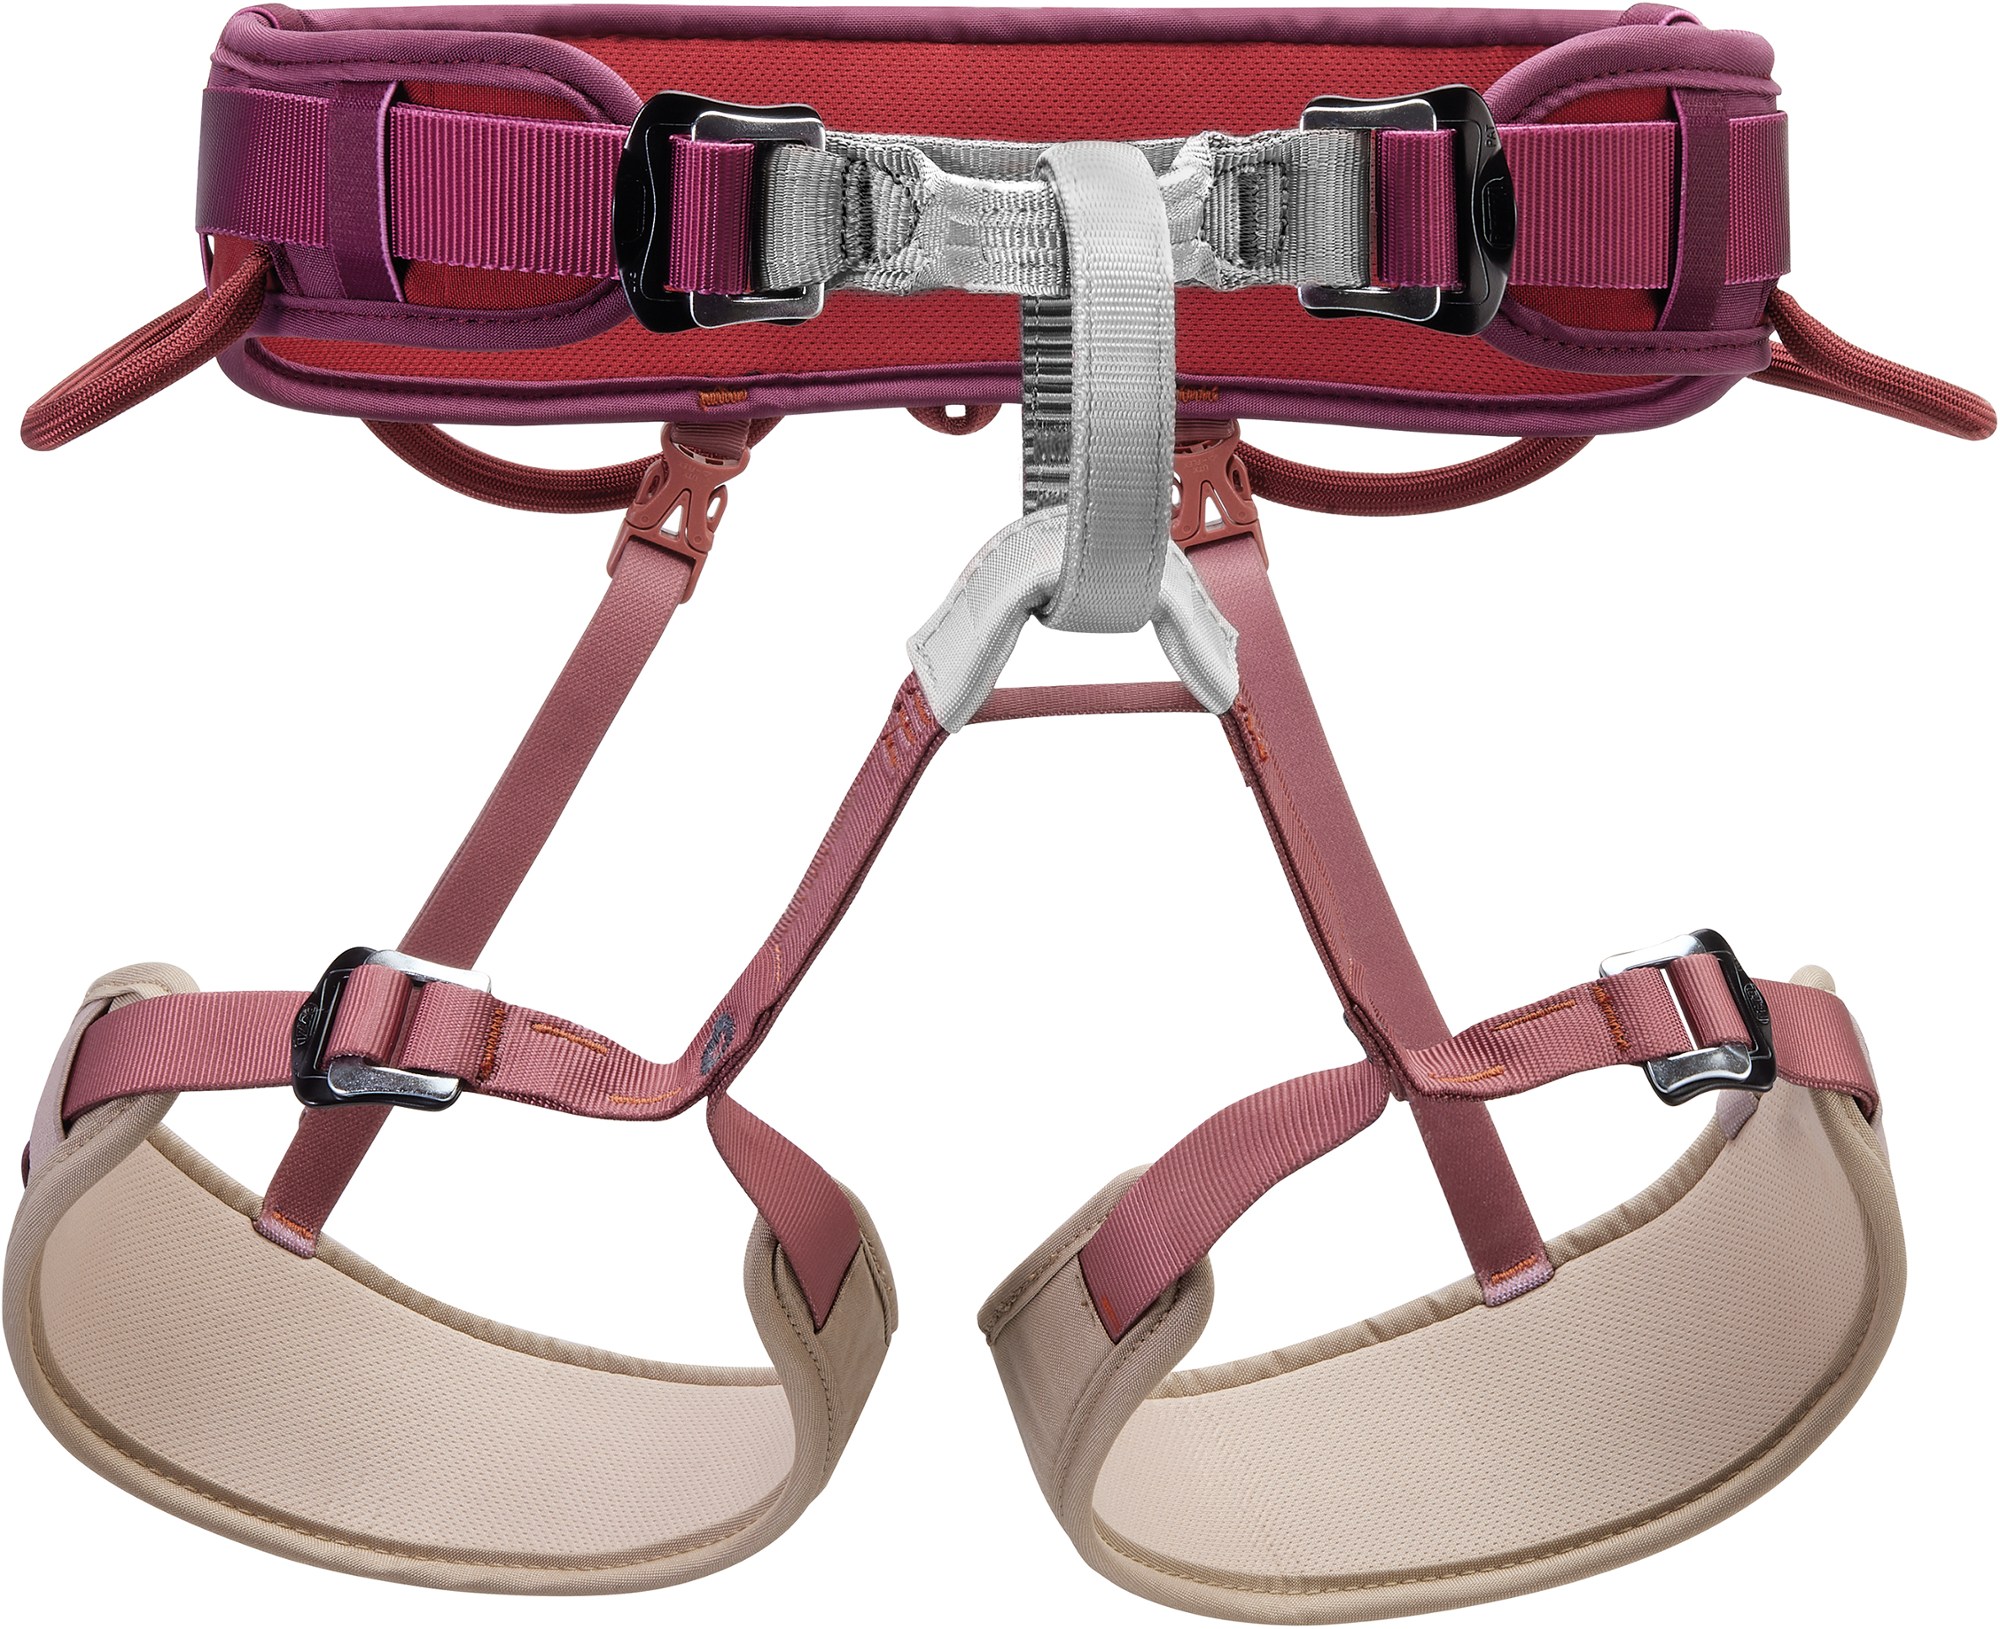 Petzl Corax climbing harness